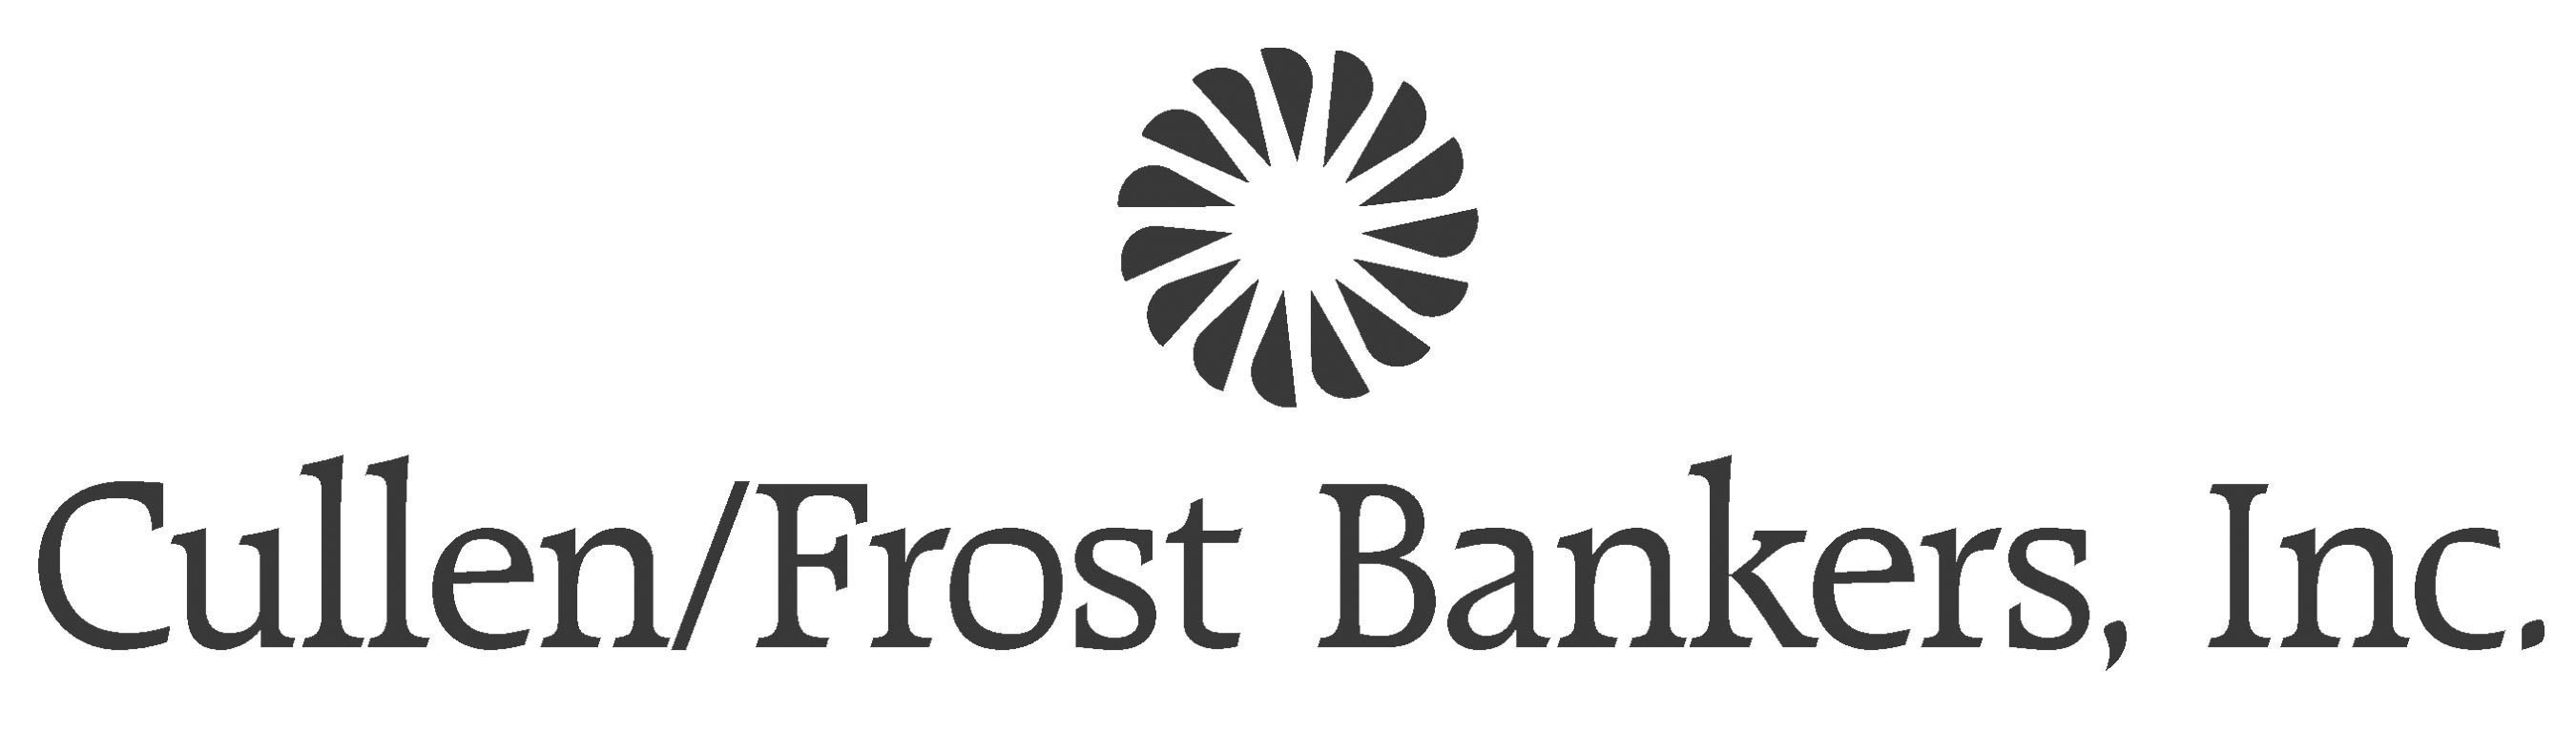 Cullen/Frost Bankers logo